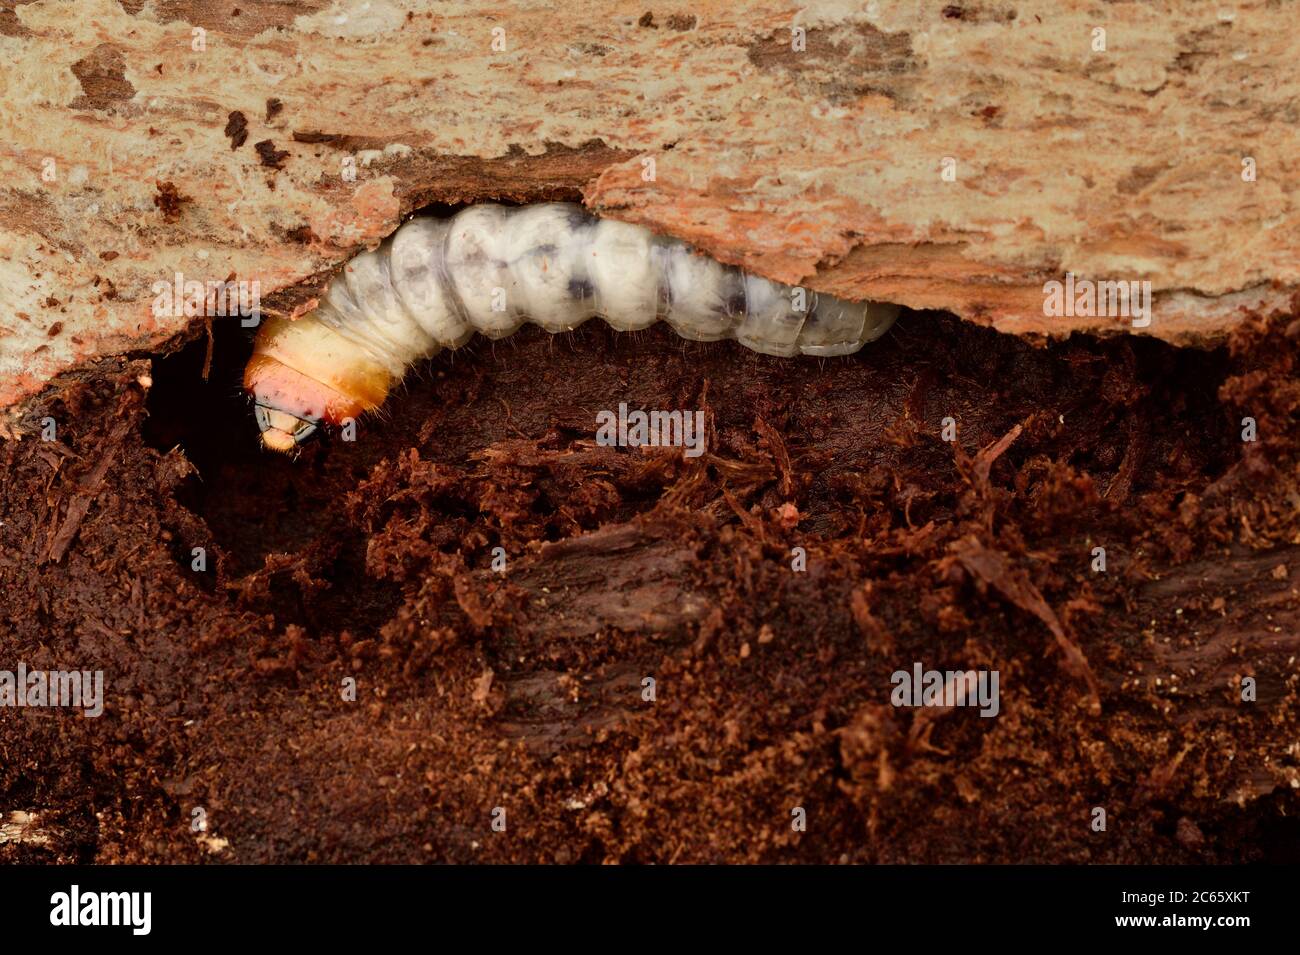 The larvae from the Pinchbuck, Longhorn Beetle (Rhagium sycophanta) eat wide, flat aisles under the bark of oak stumps, fellen trunks or damaged oaks, Kiel, Germany Stock Photo